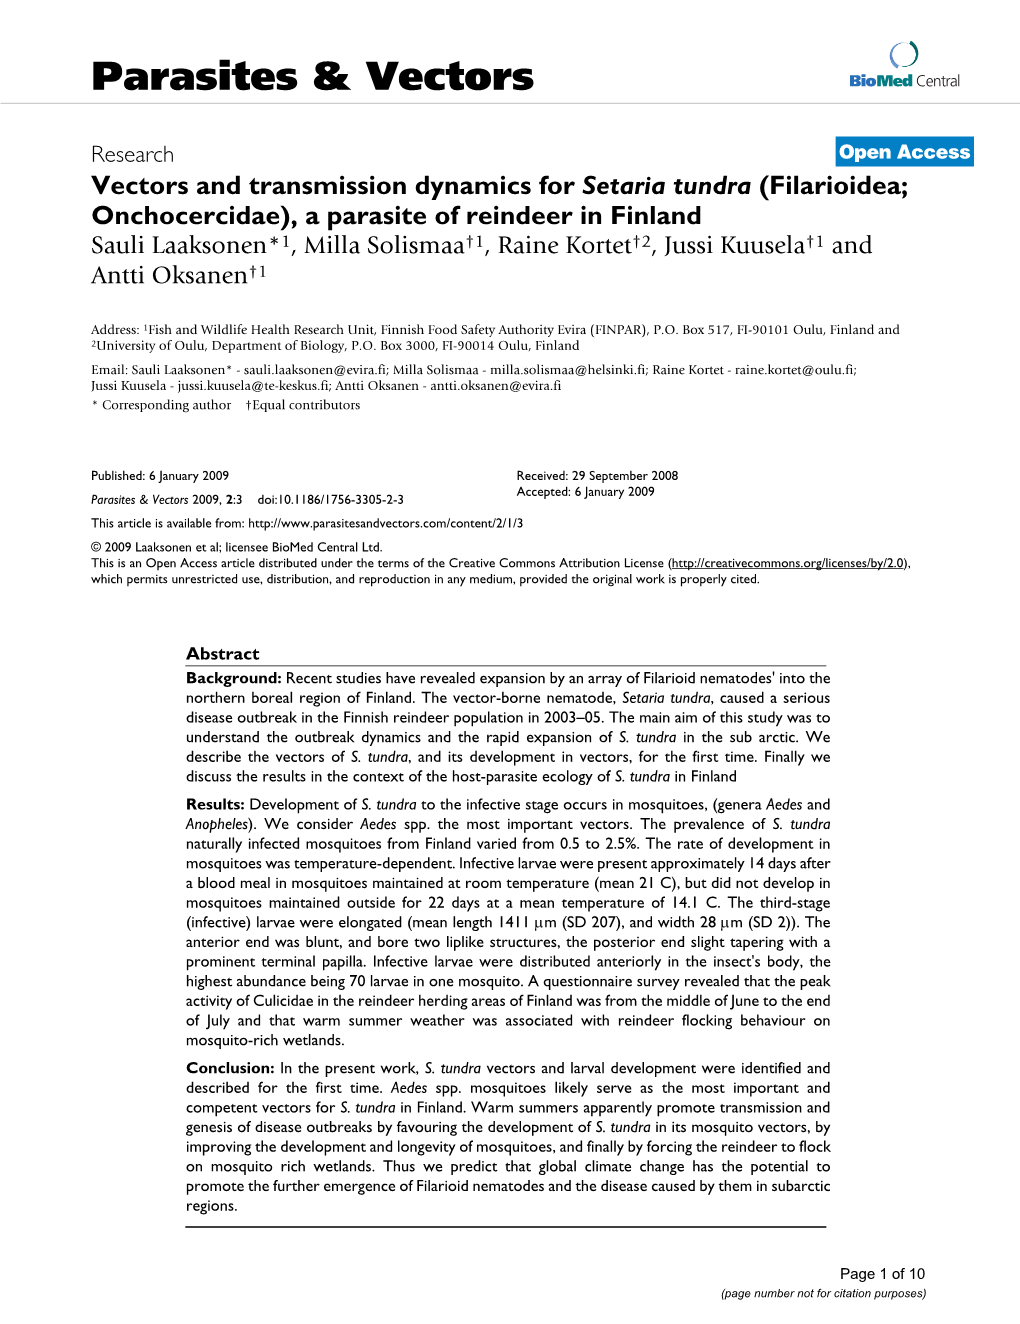 Vectors and Transmission Dynamics for Setaria Tundra (Filarioidea